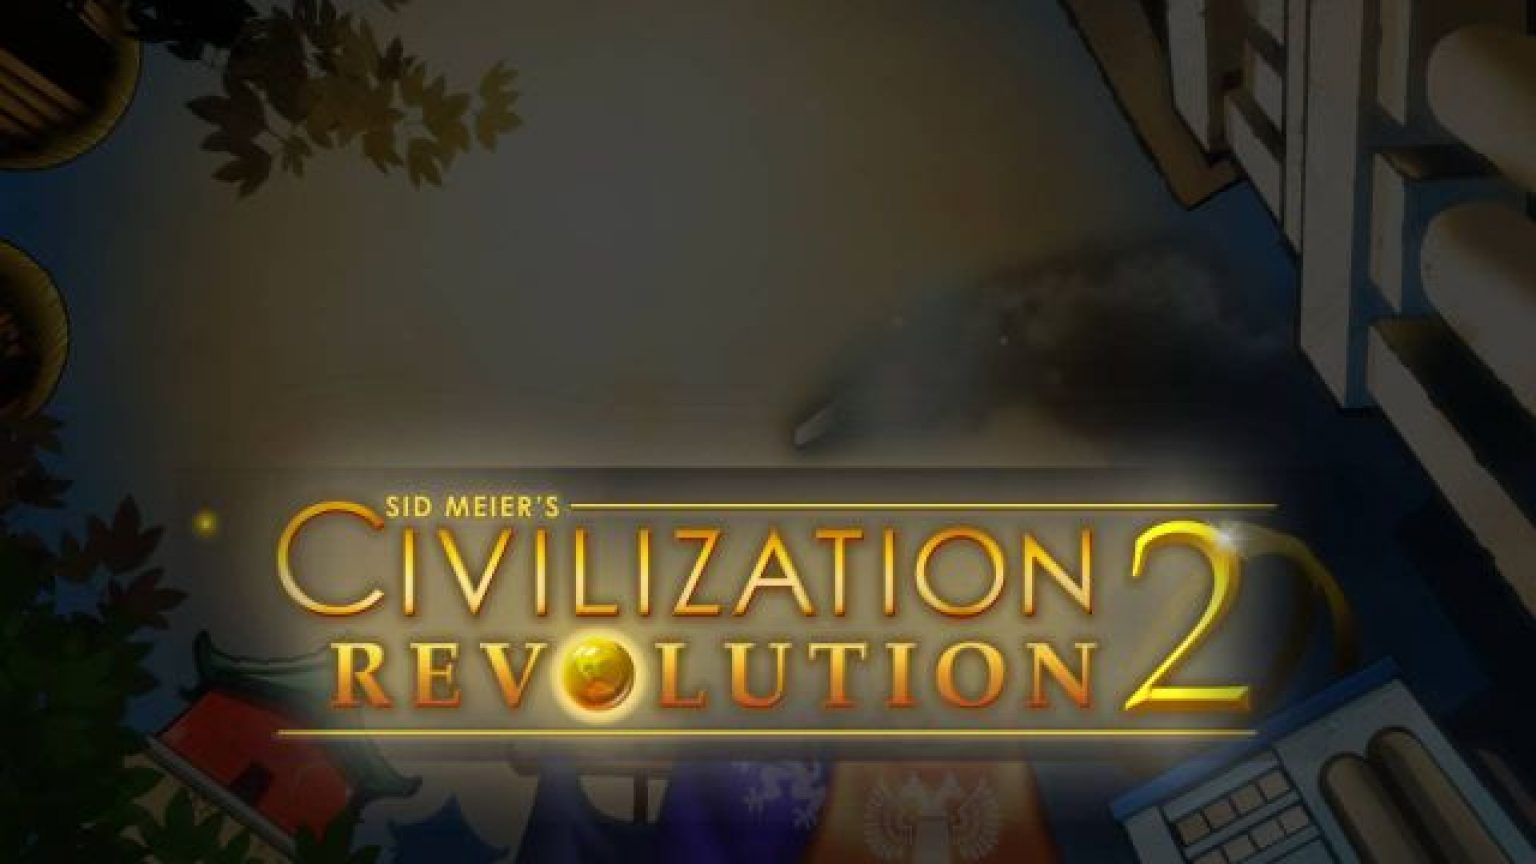 civilization revolution 2 plus gamespot